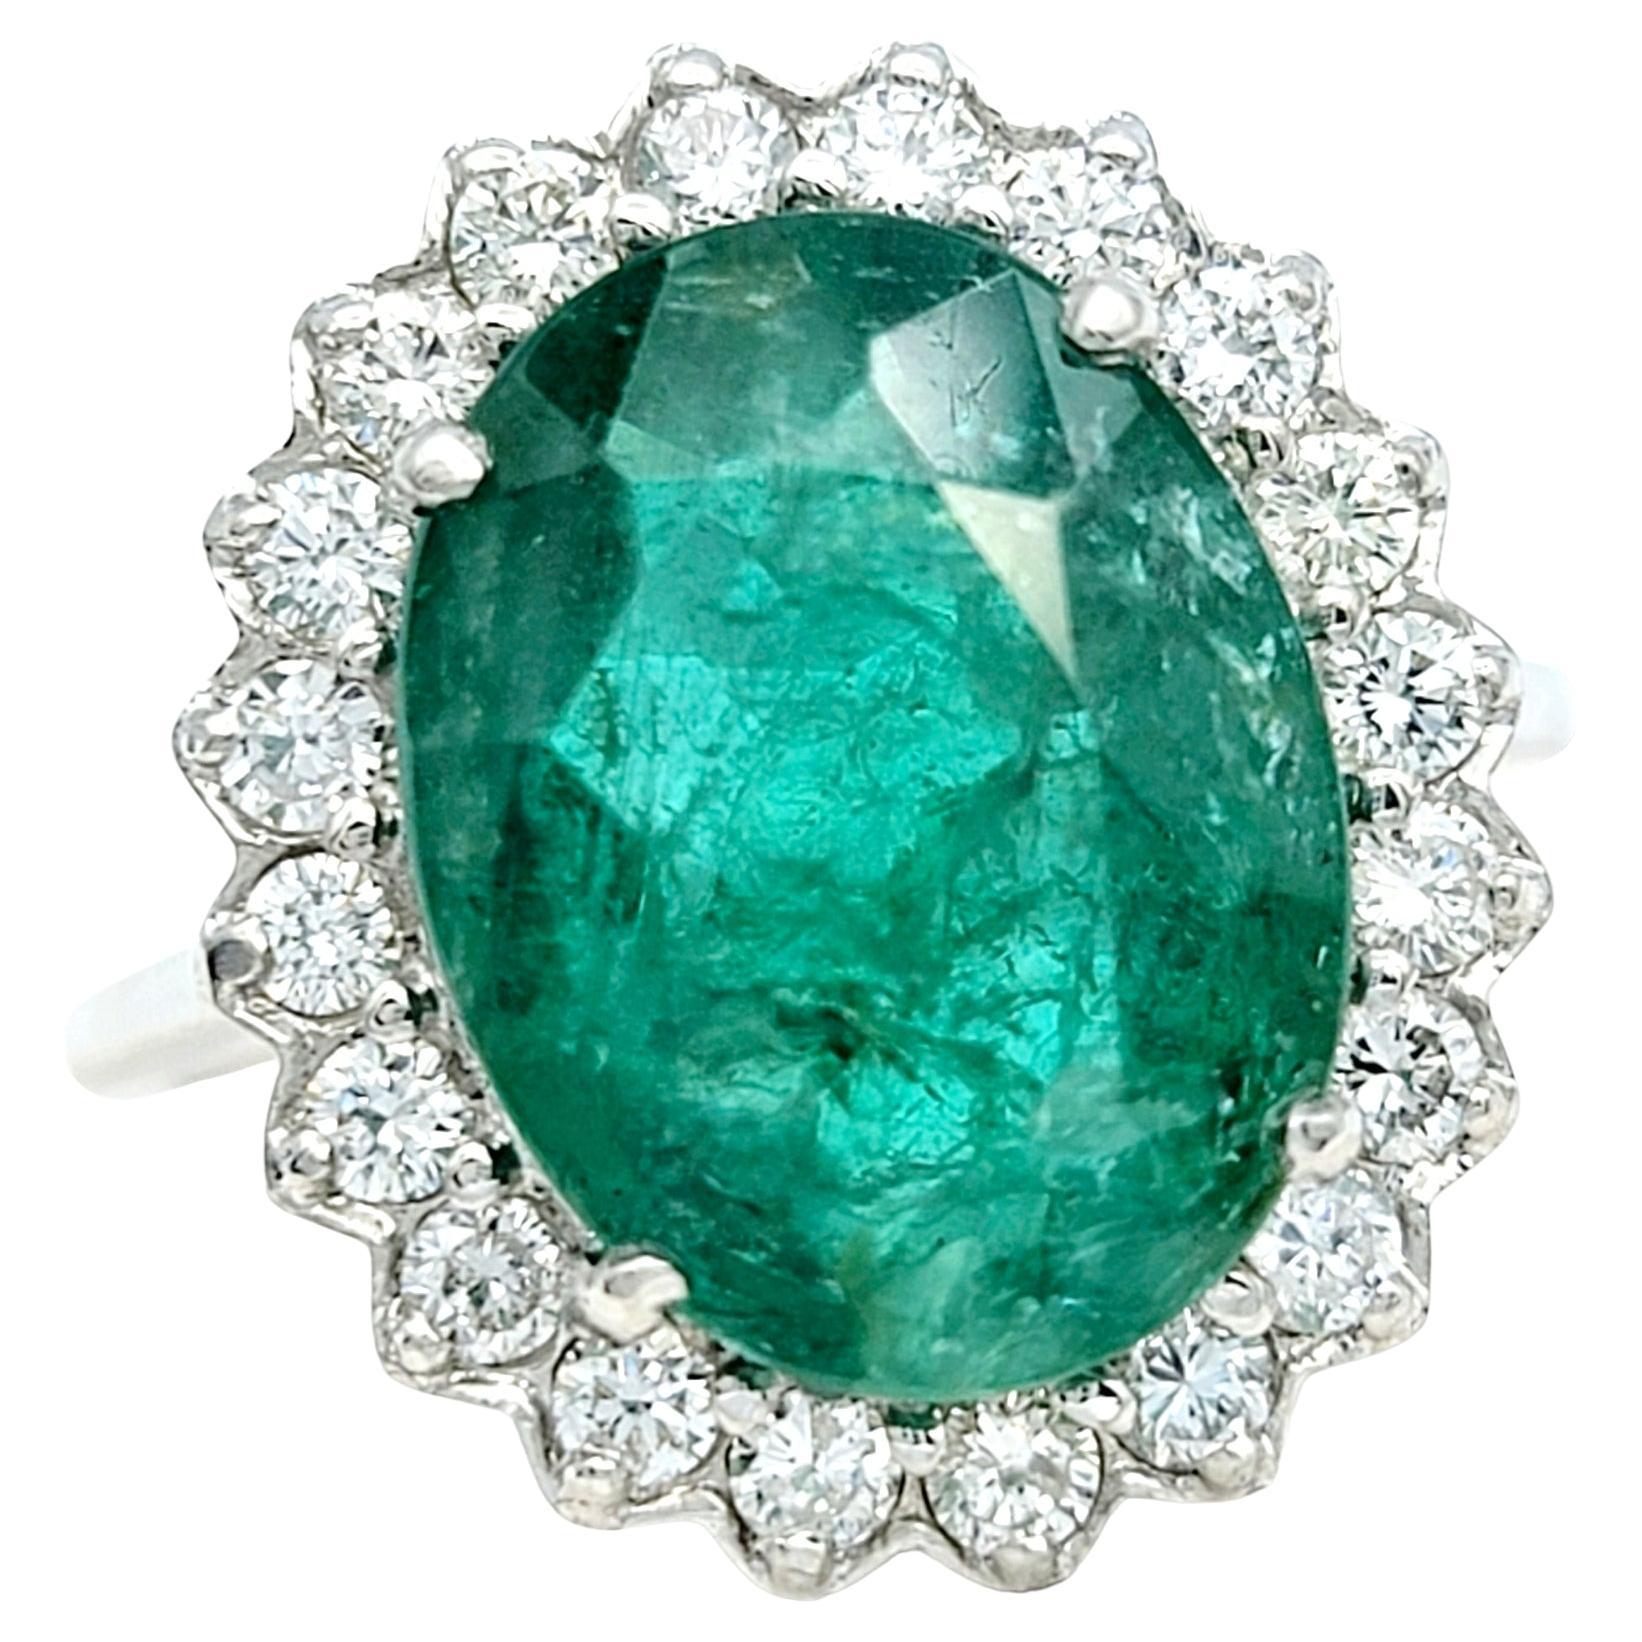 4.98 Carat Oval Cut Emerald and Diamond Halo Ring Set in 18 Karat White Gold